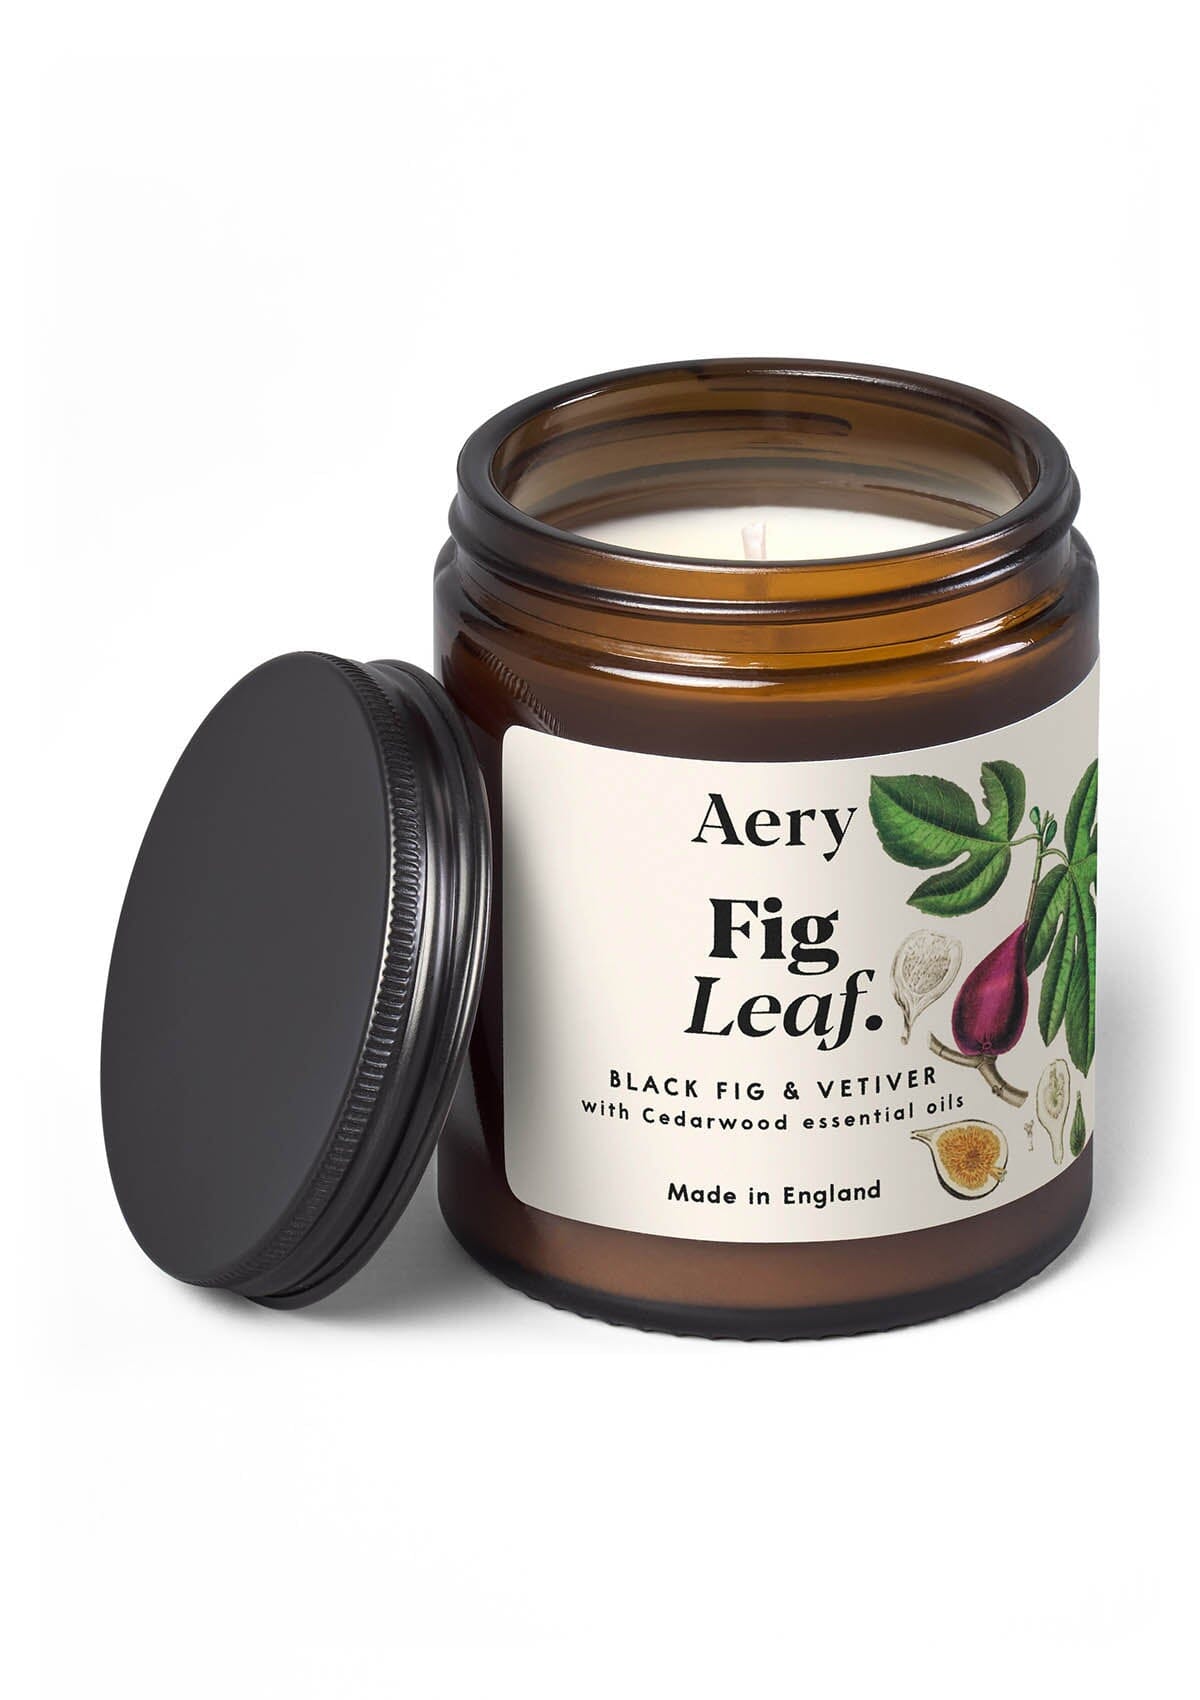 Cream Fig Leaf jar candle by Aery on white background 